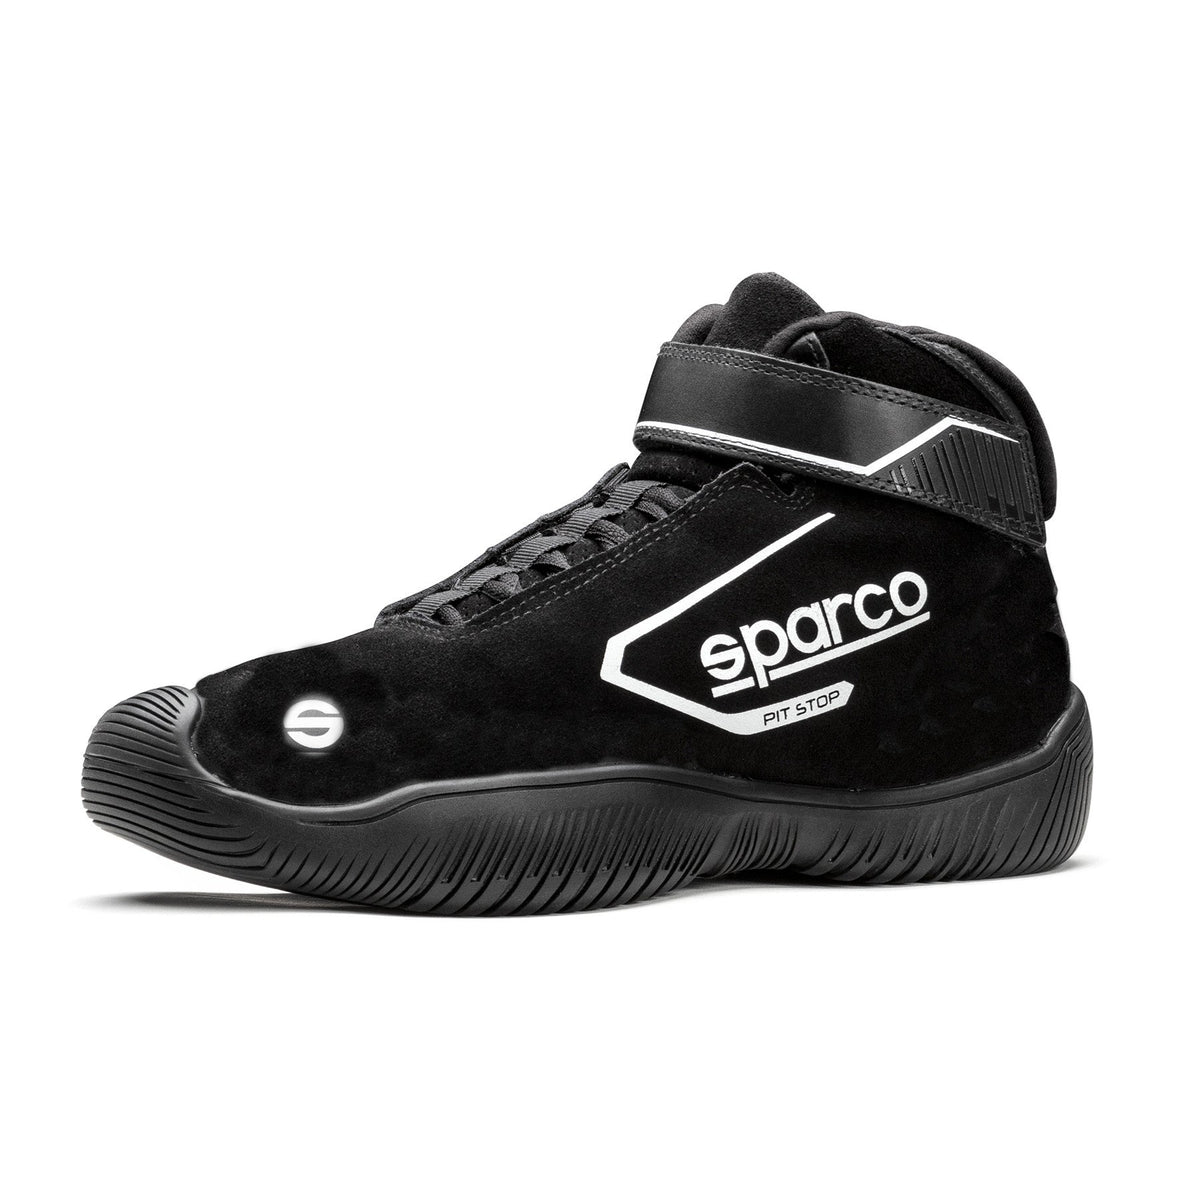 Sparco Pit Stop 2 Crew Shoes